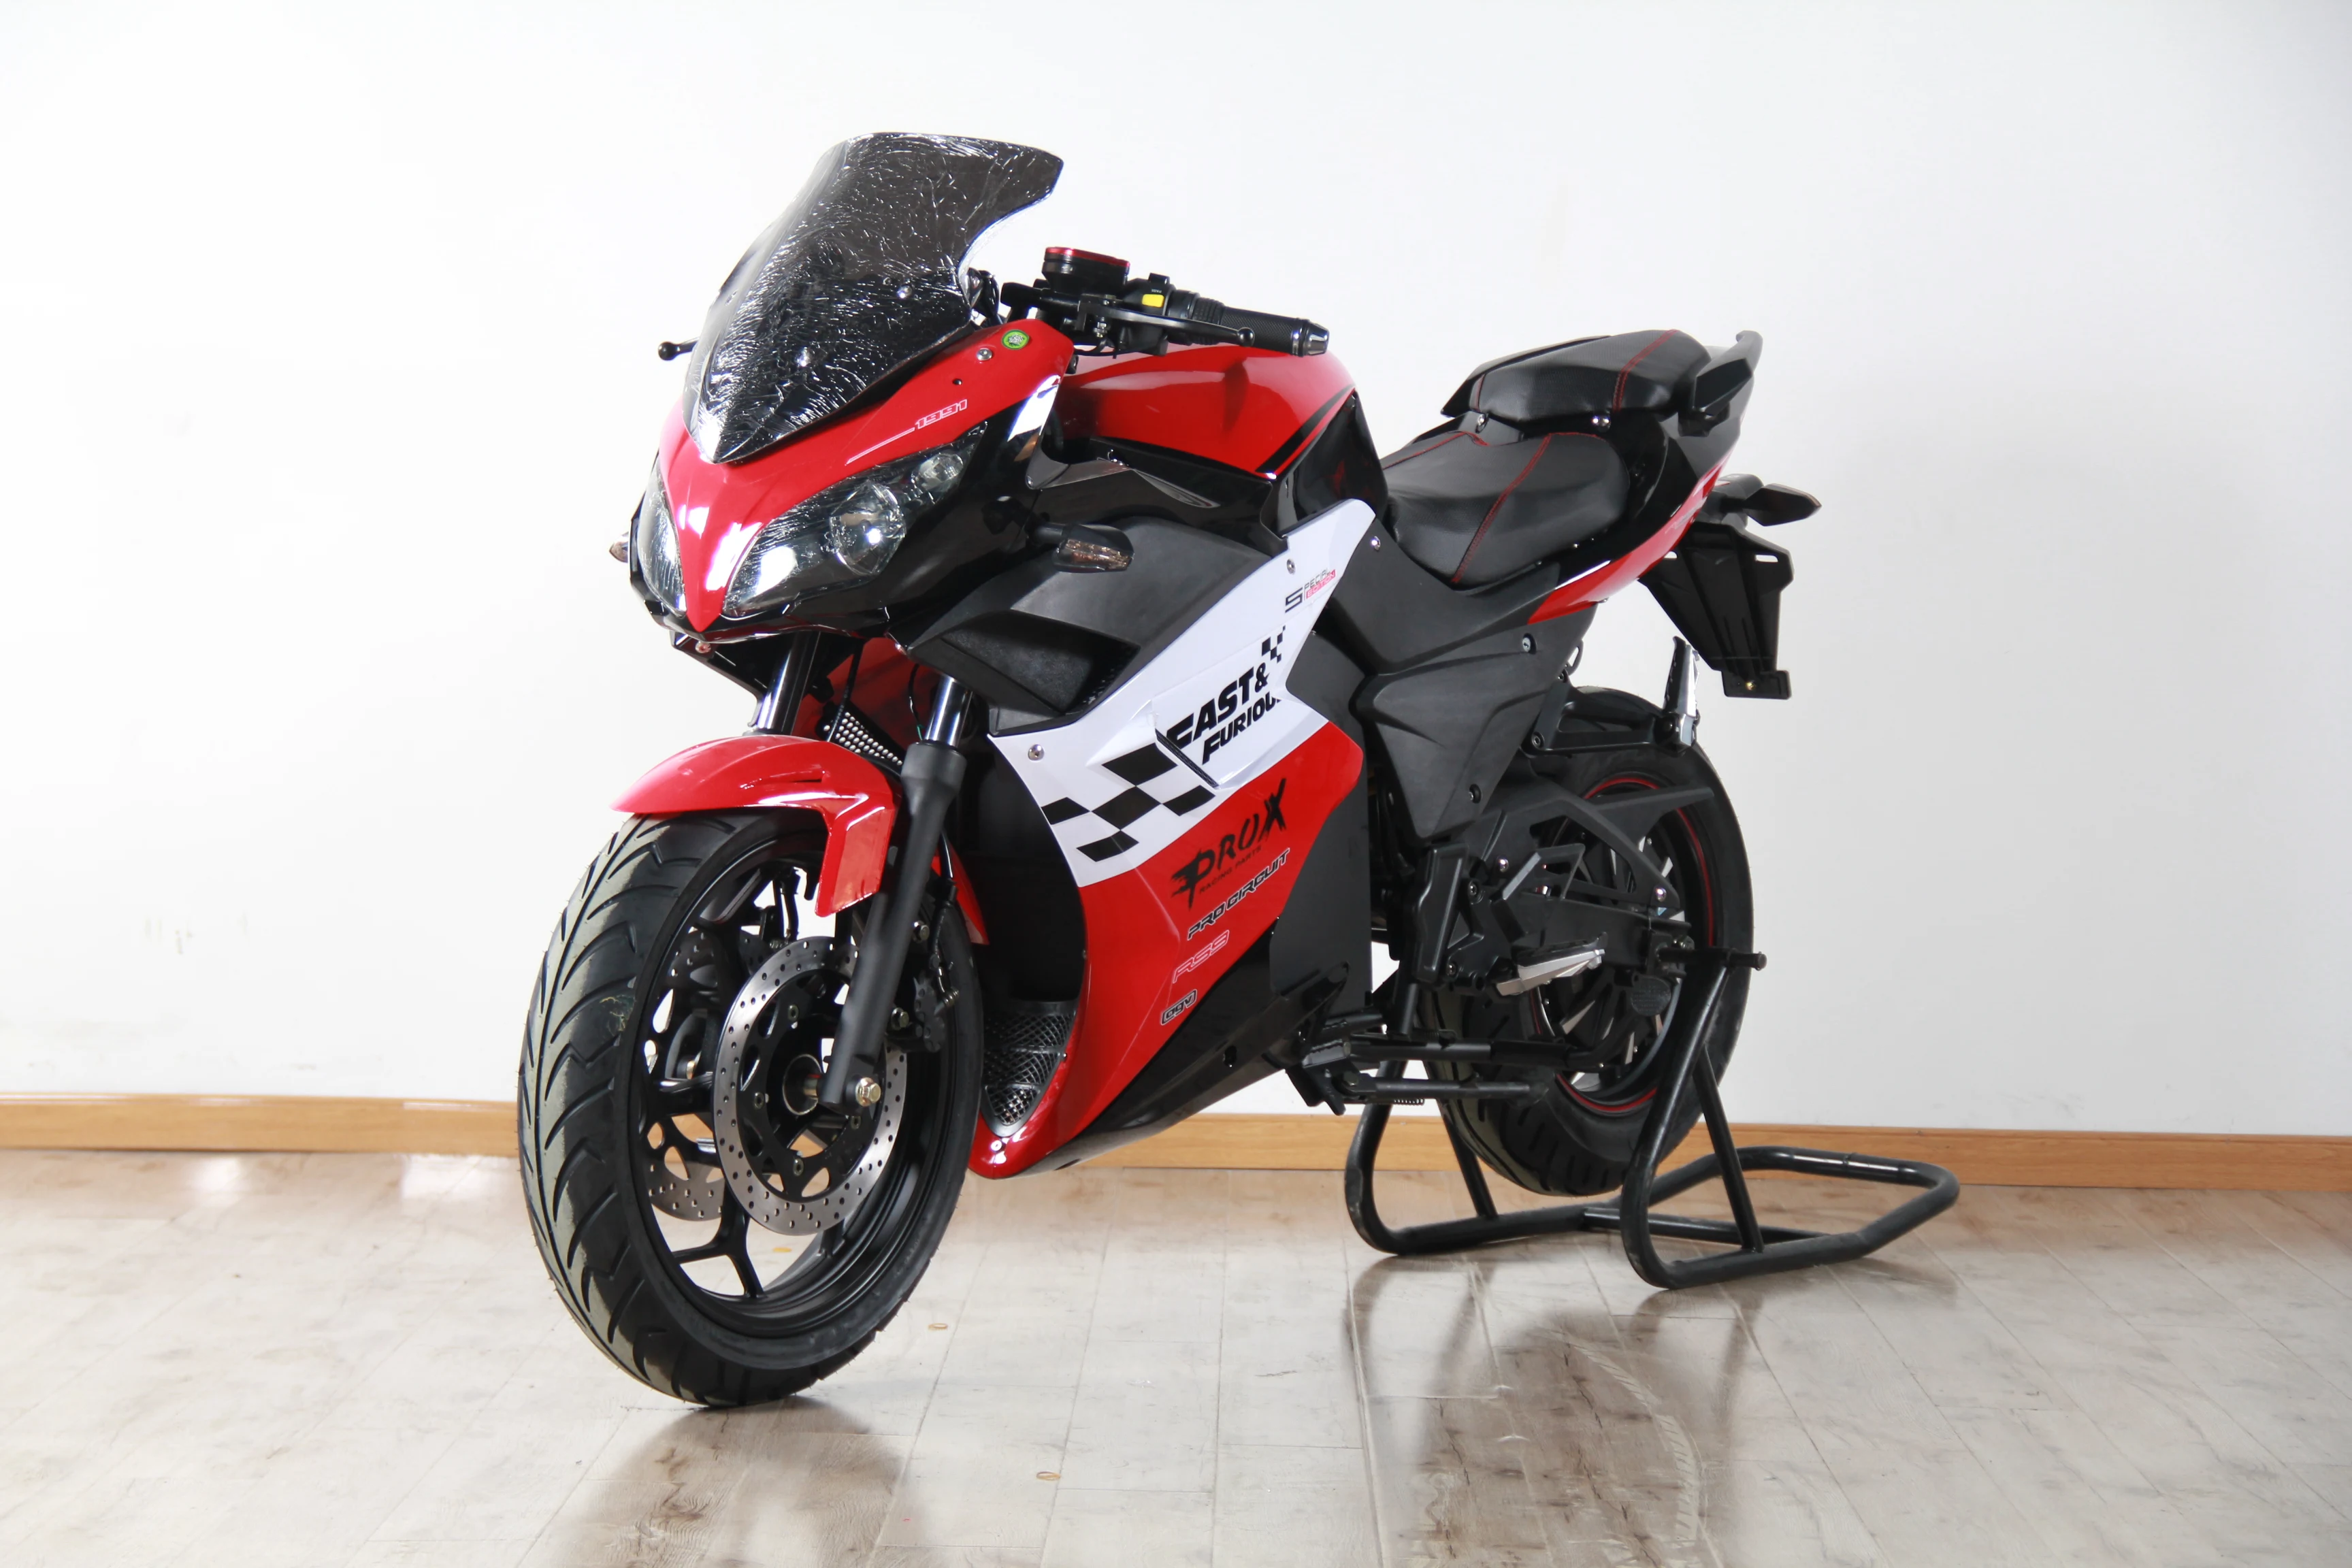 Diy motos chinas precios cheap price electric motorcycle companies